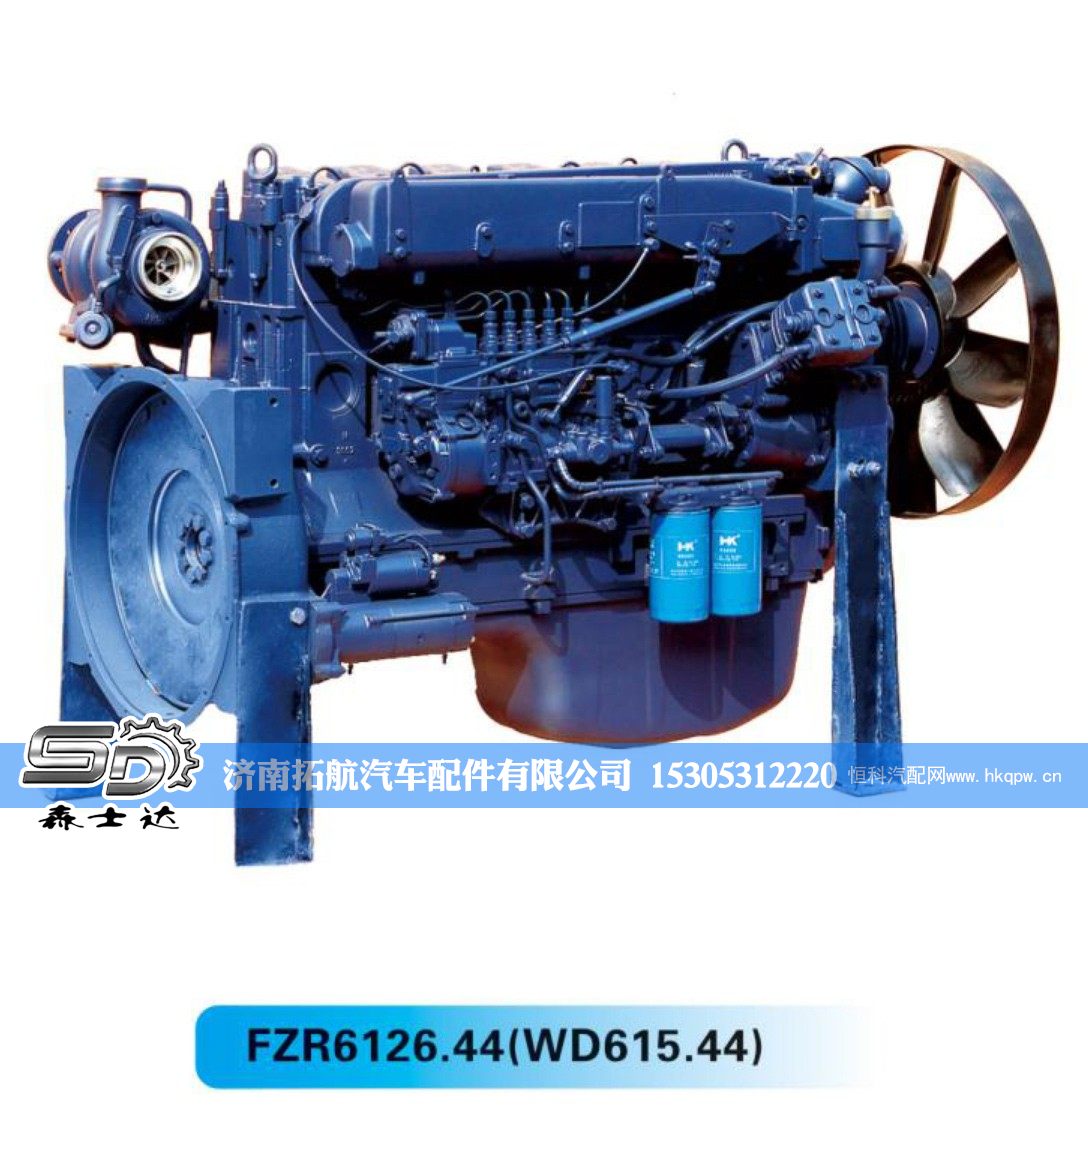 FZR6126.44(WD615.44),车机系列-FZR6126.44(WD615.44),济南拓航汽车配件有限公司